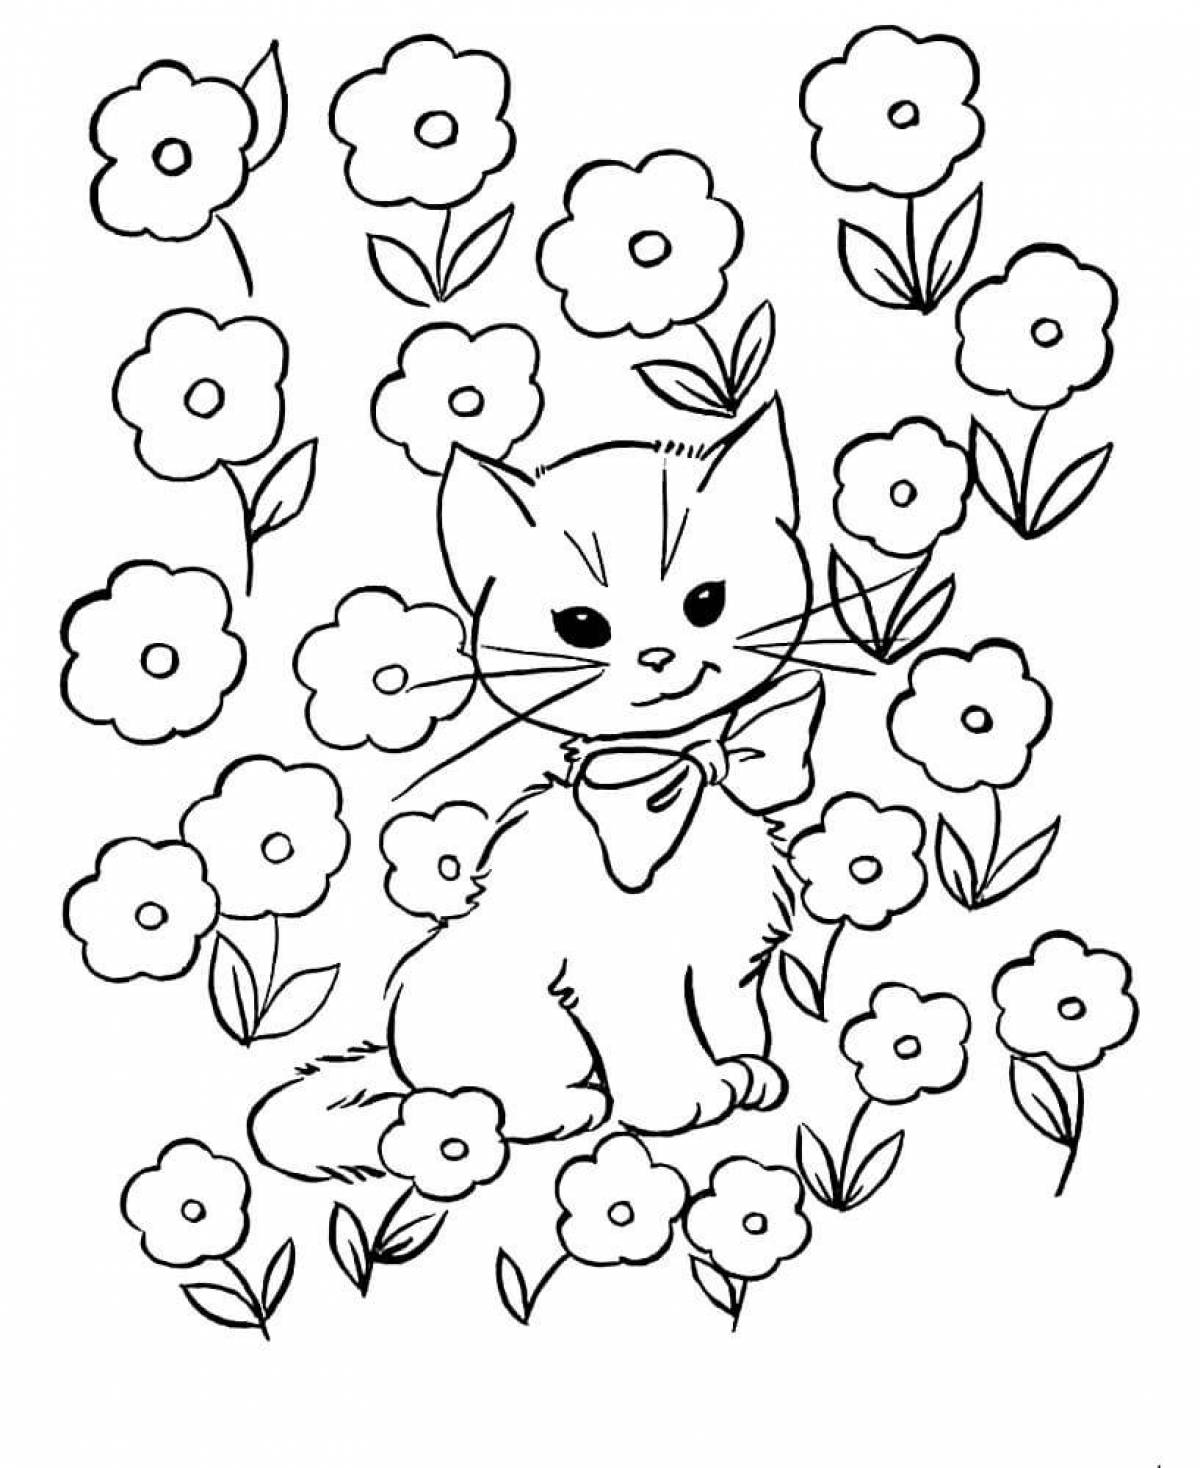 Fun coloring kitty for kids